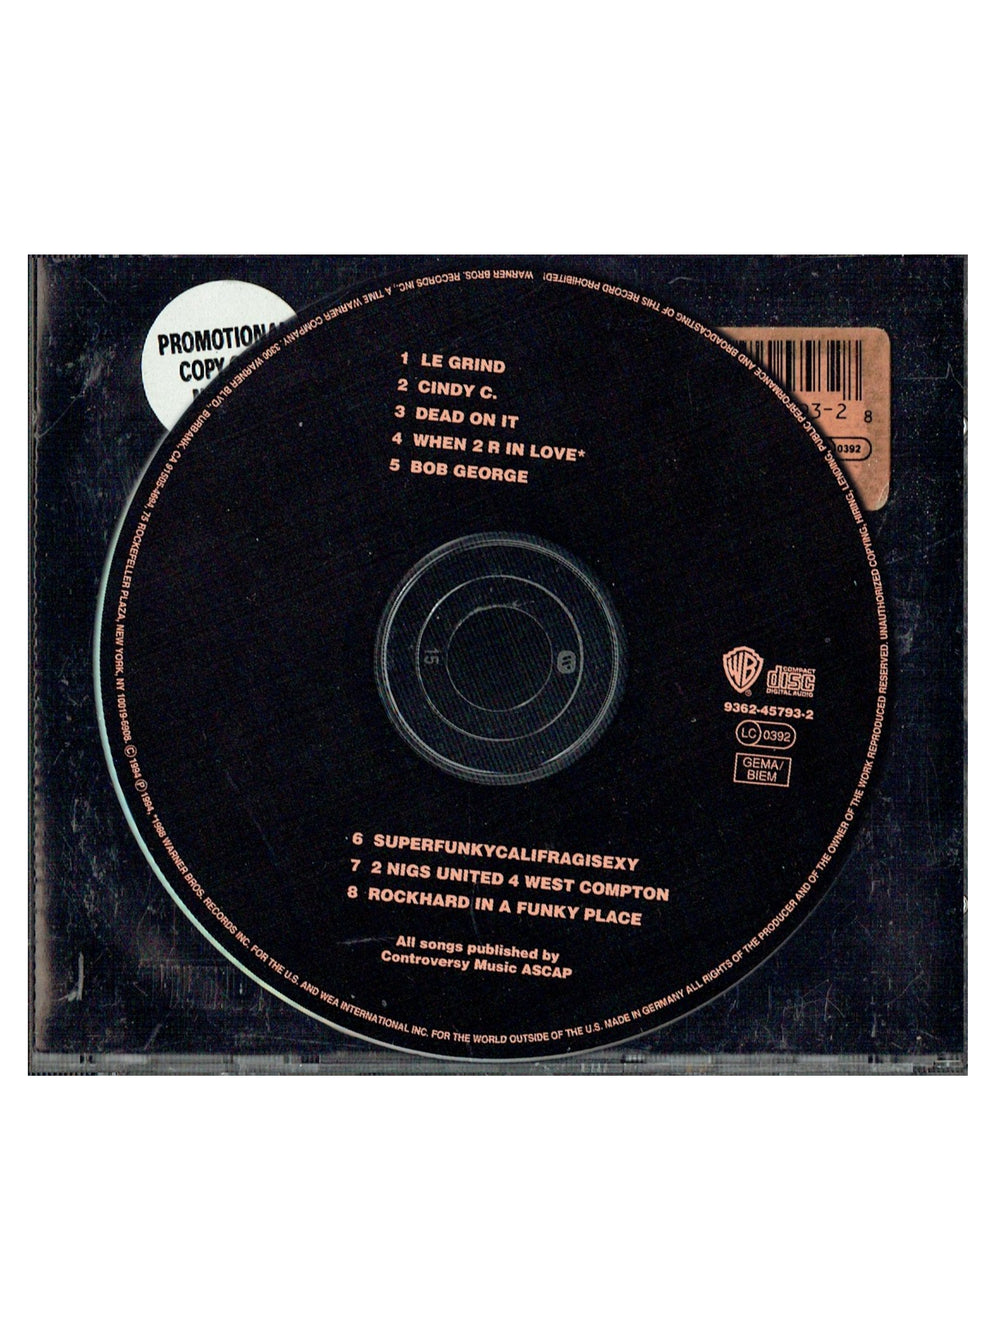 Prince The Black Album Original 1994 CD Album 8 Tracks Jewel Case Stickers Promotional